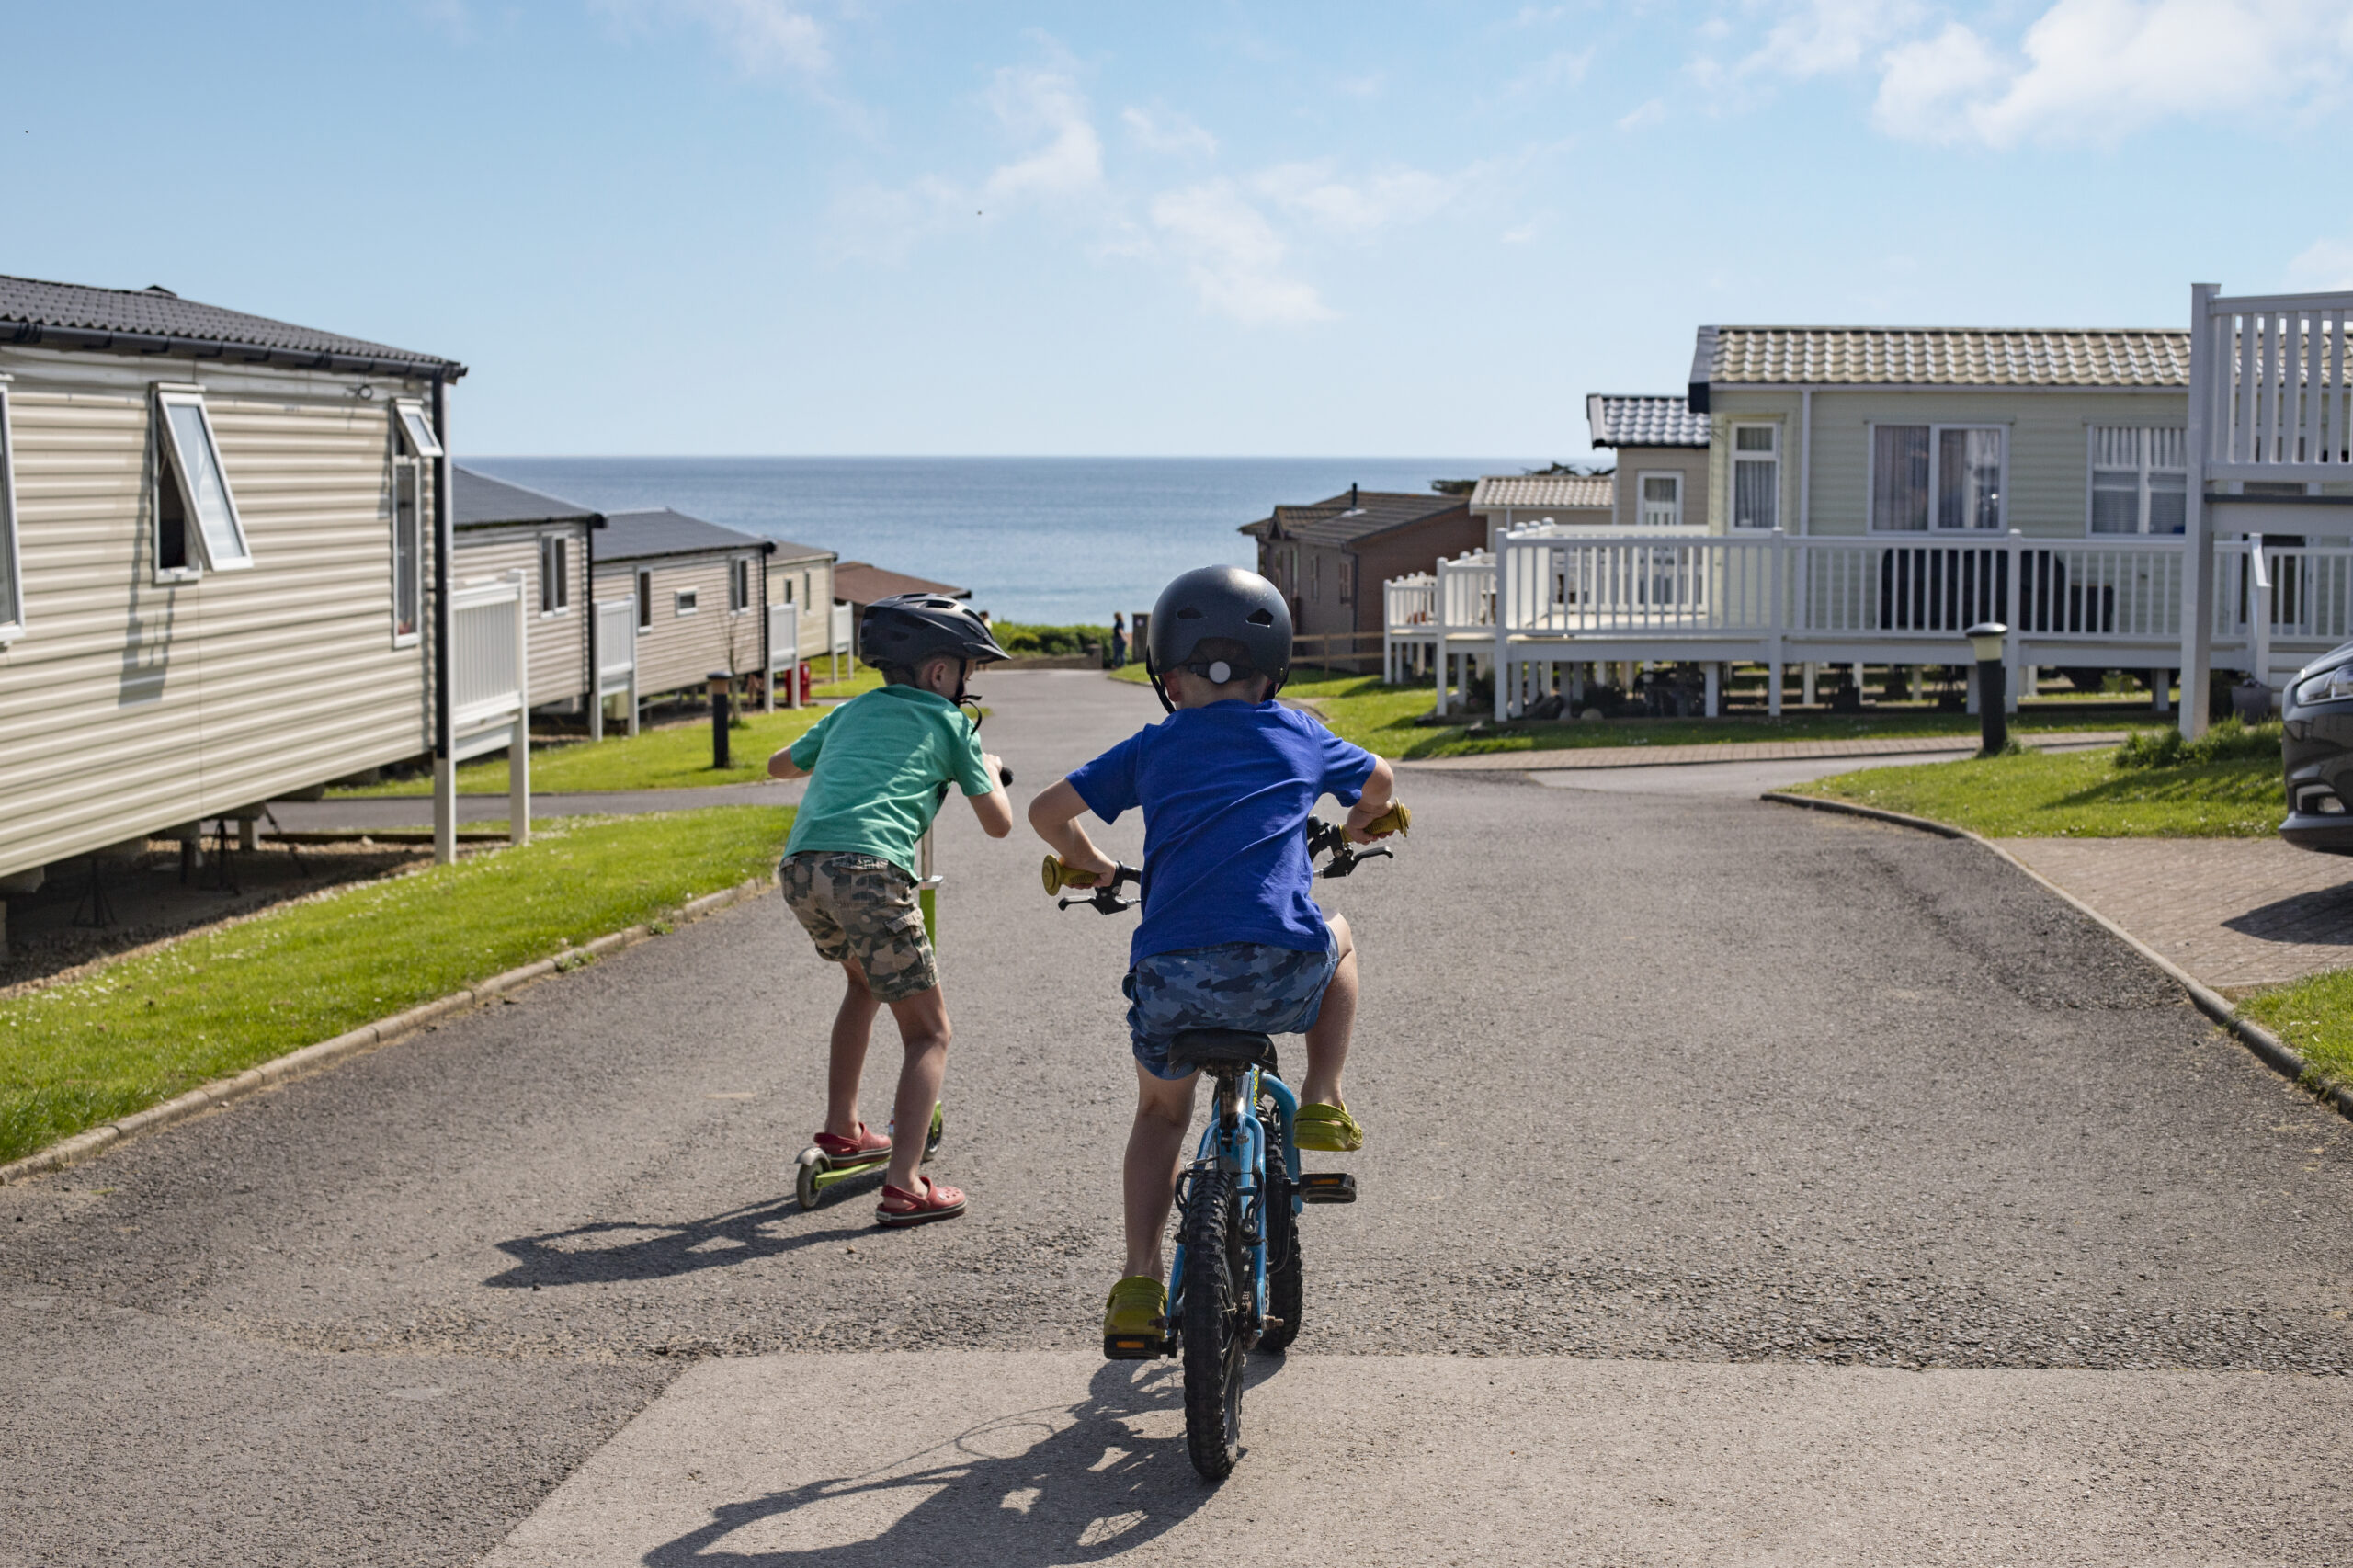 children cycling towards the sea past caravans at golden cap holiday park